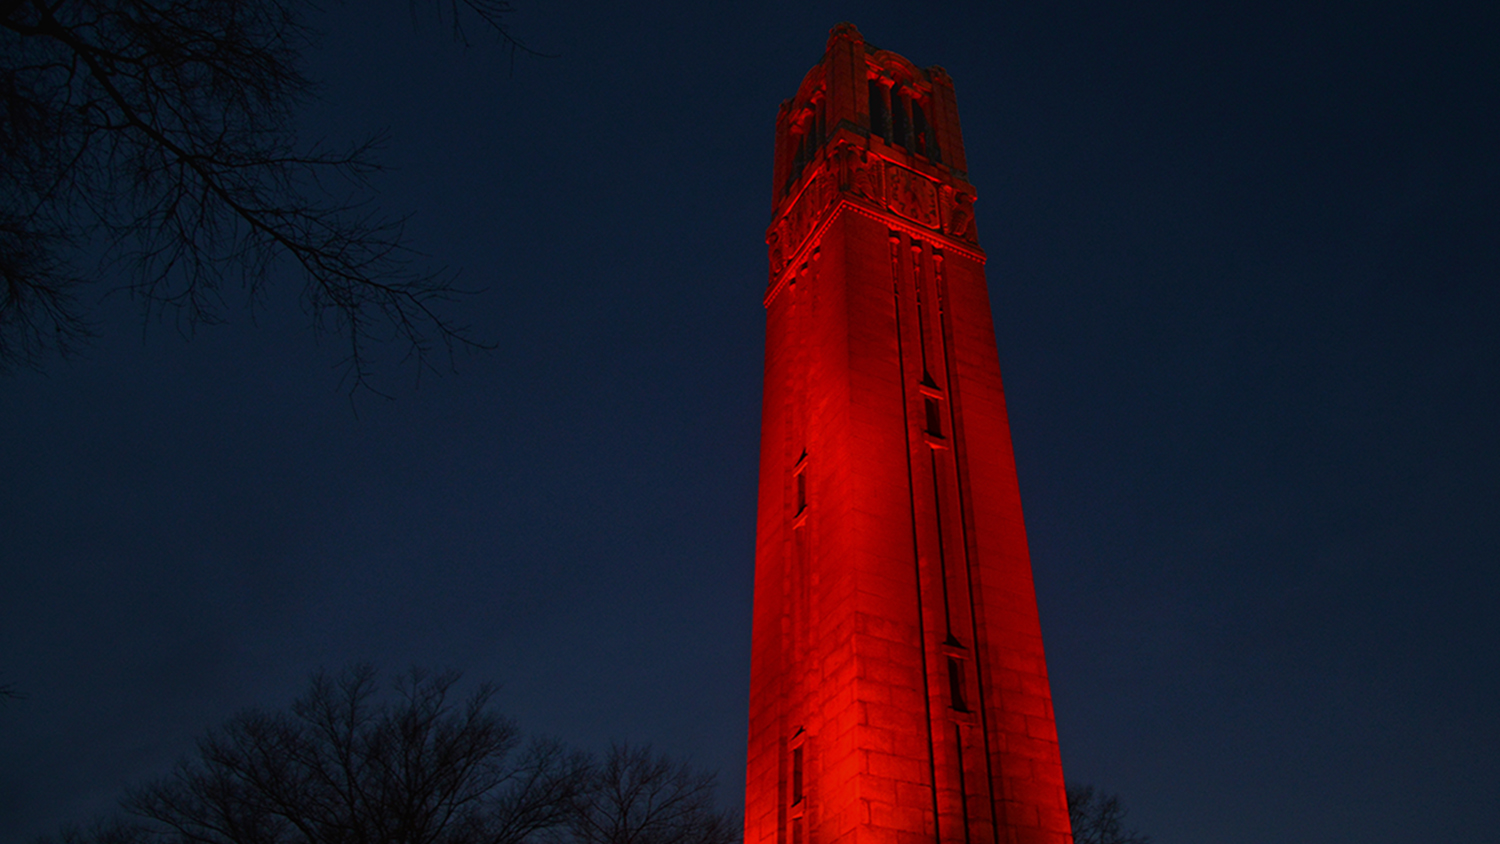 The belltower lit red